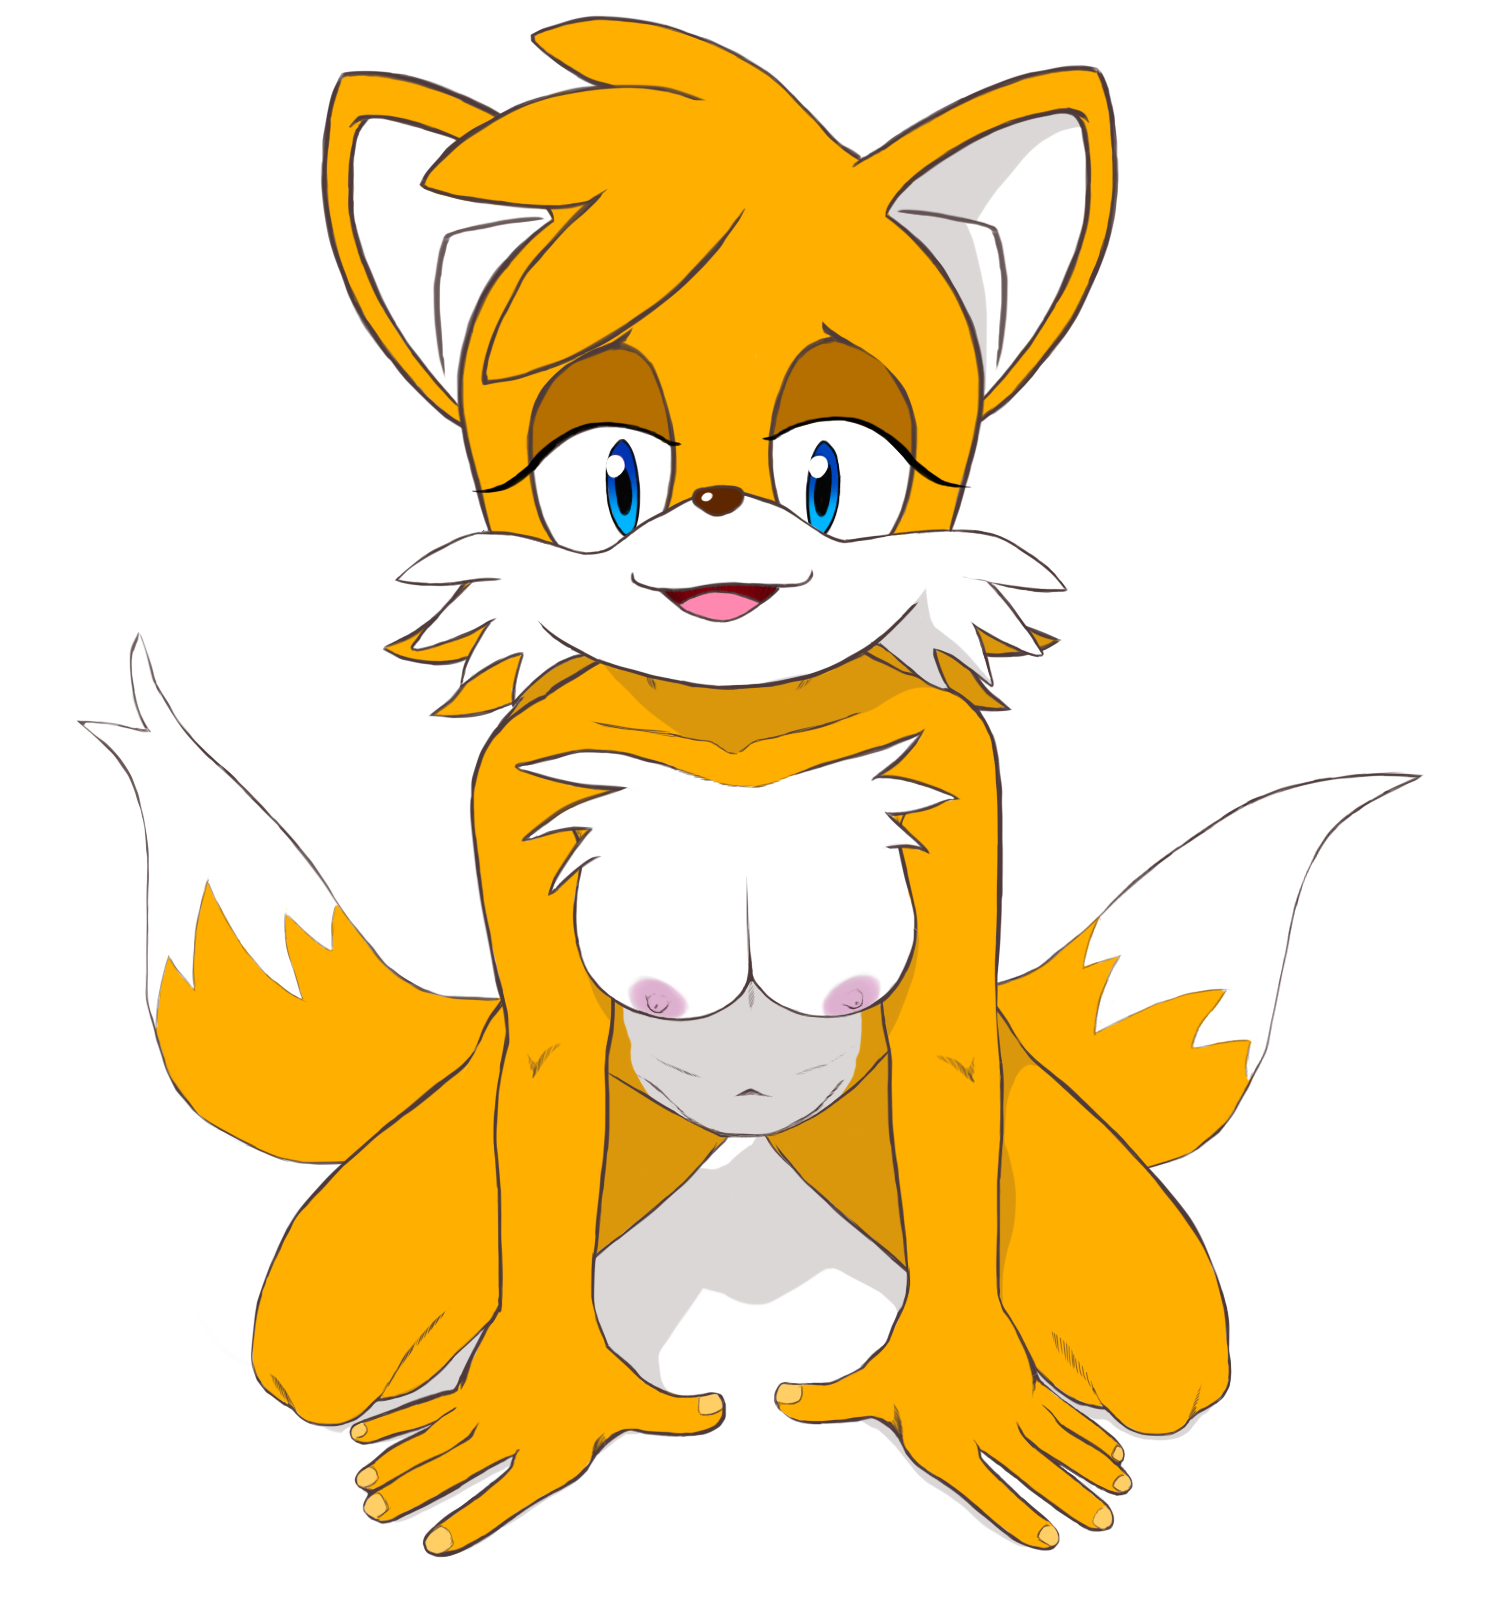 Tailsko the fox